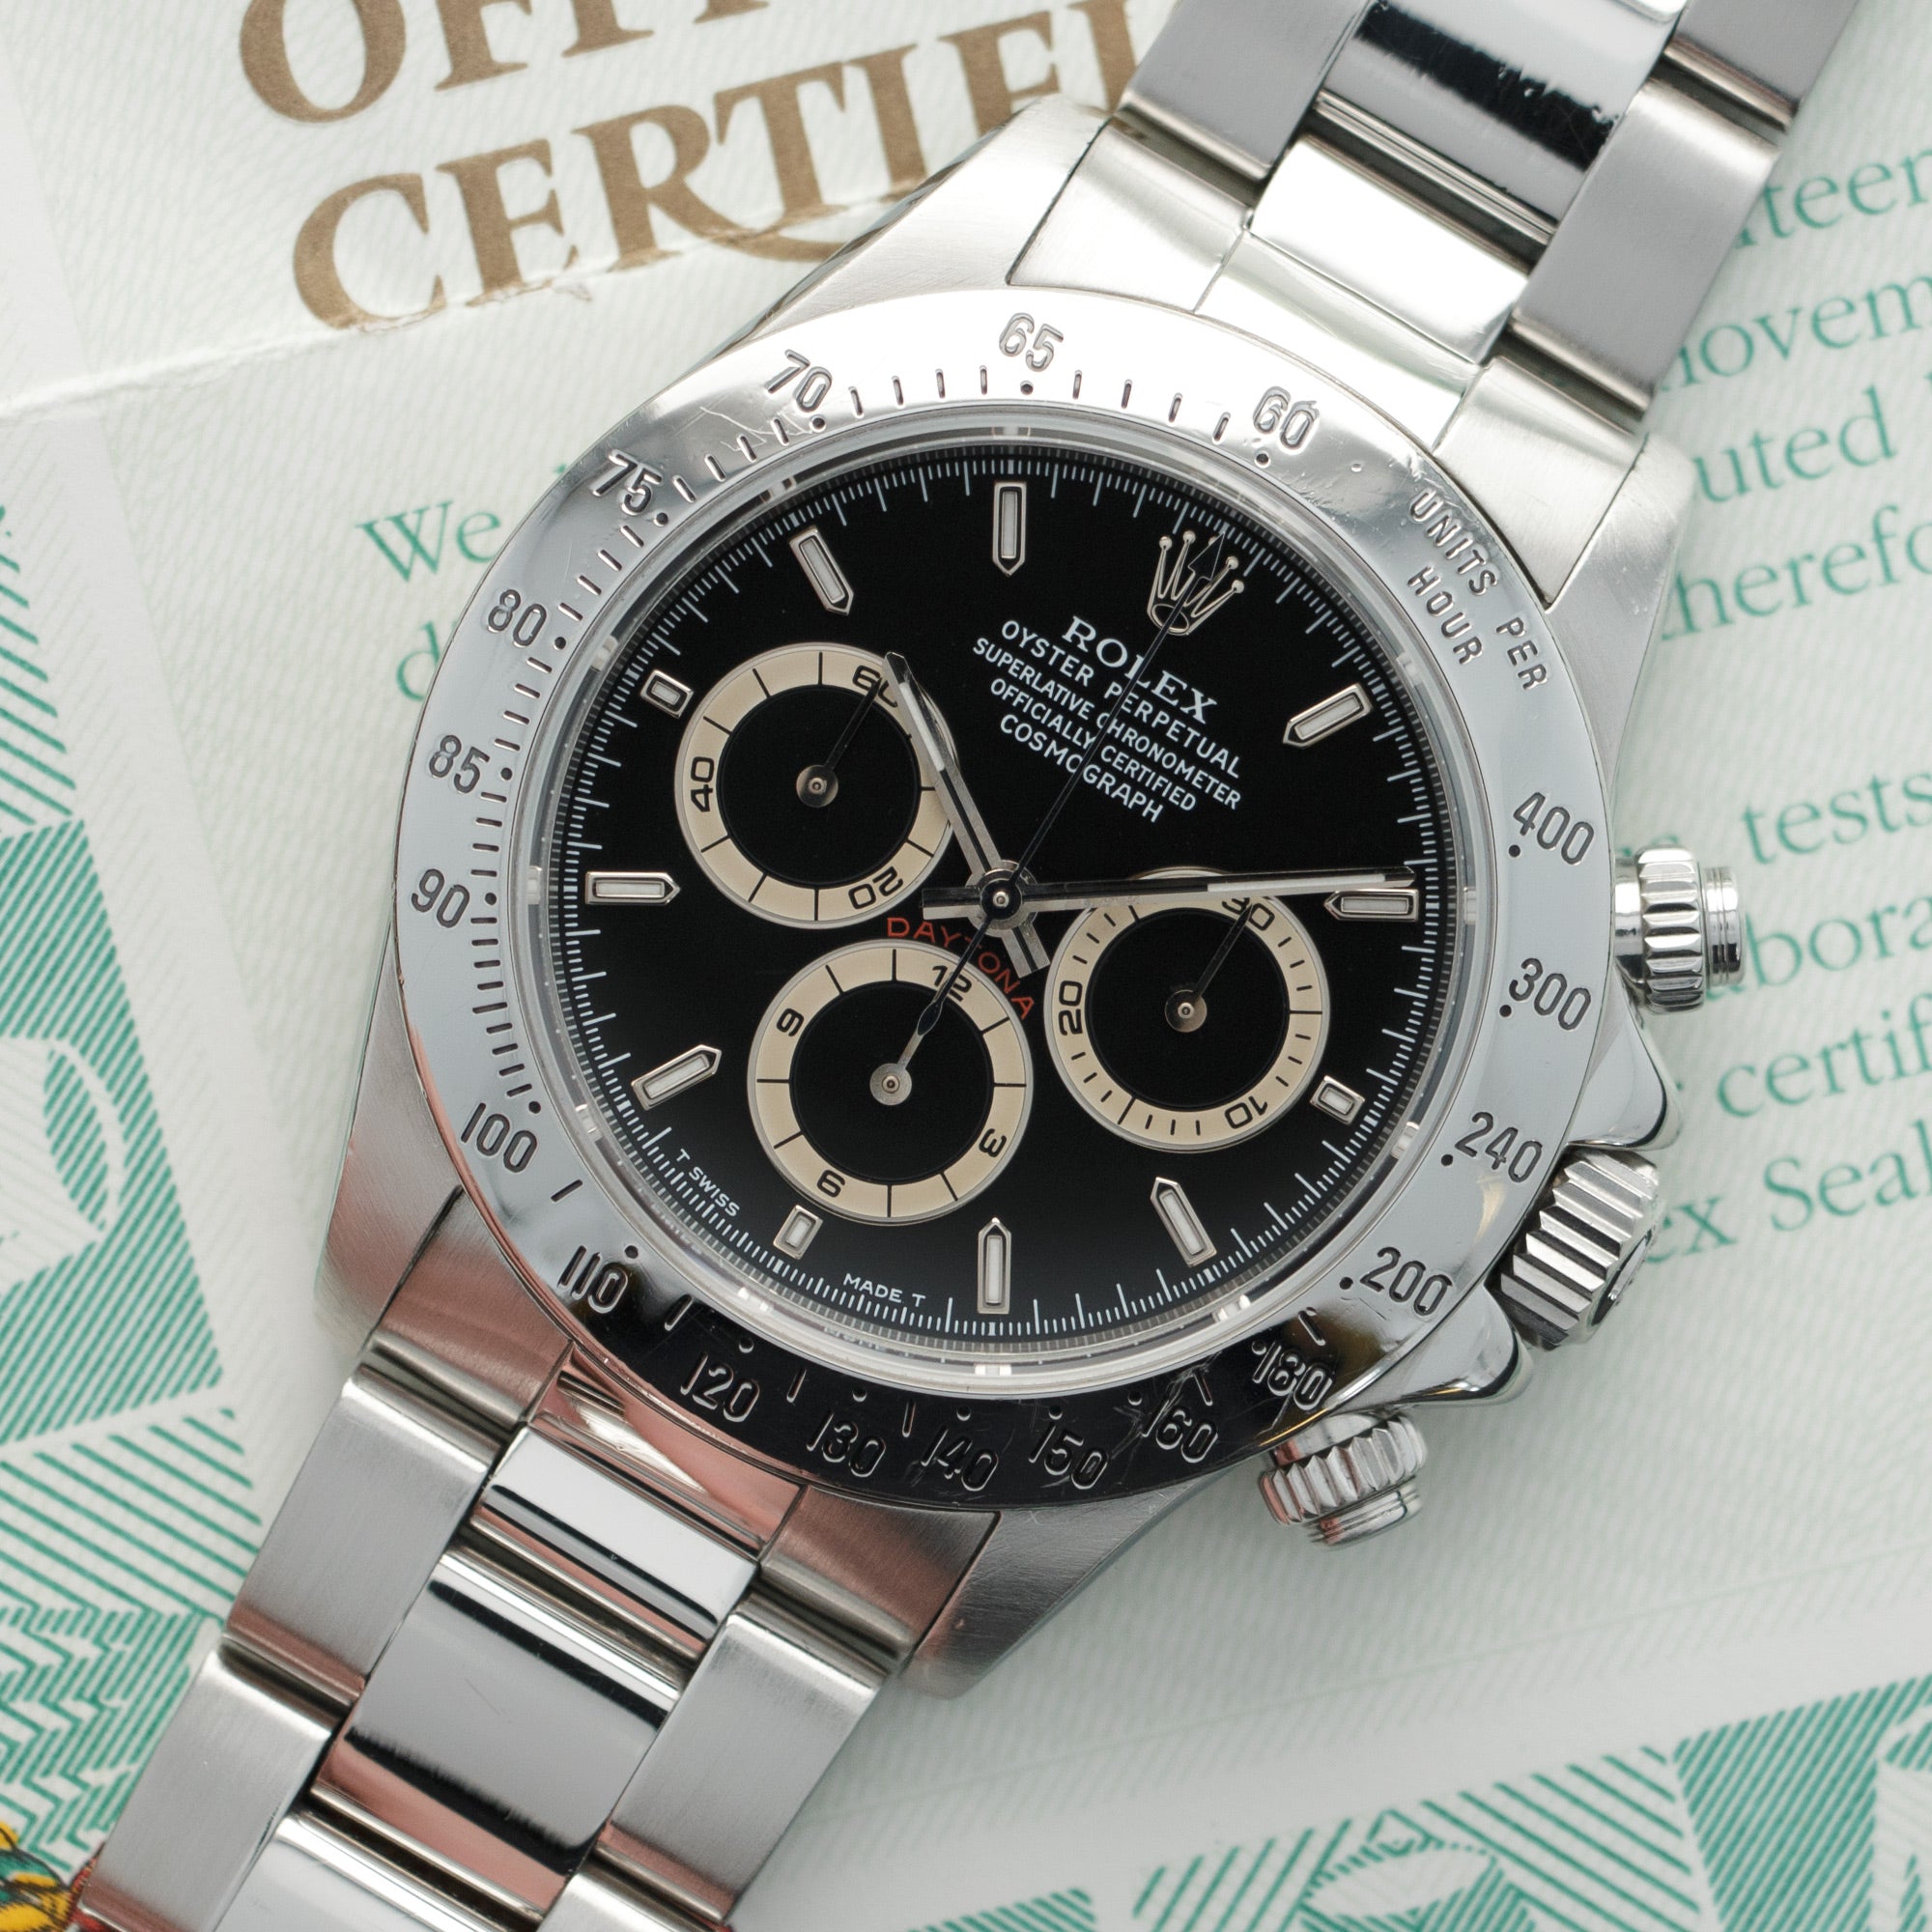 Rolex - Rolex Cosmograph Daytona Zenith Watch Ref. 16520 with Original Warranty Paper - The Keystone Watches